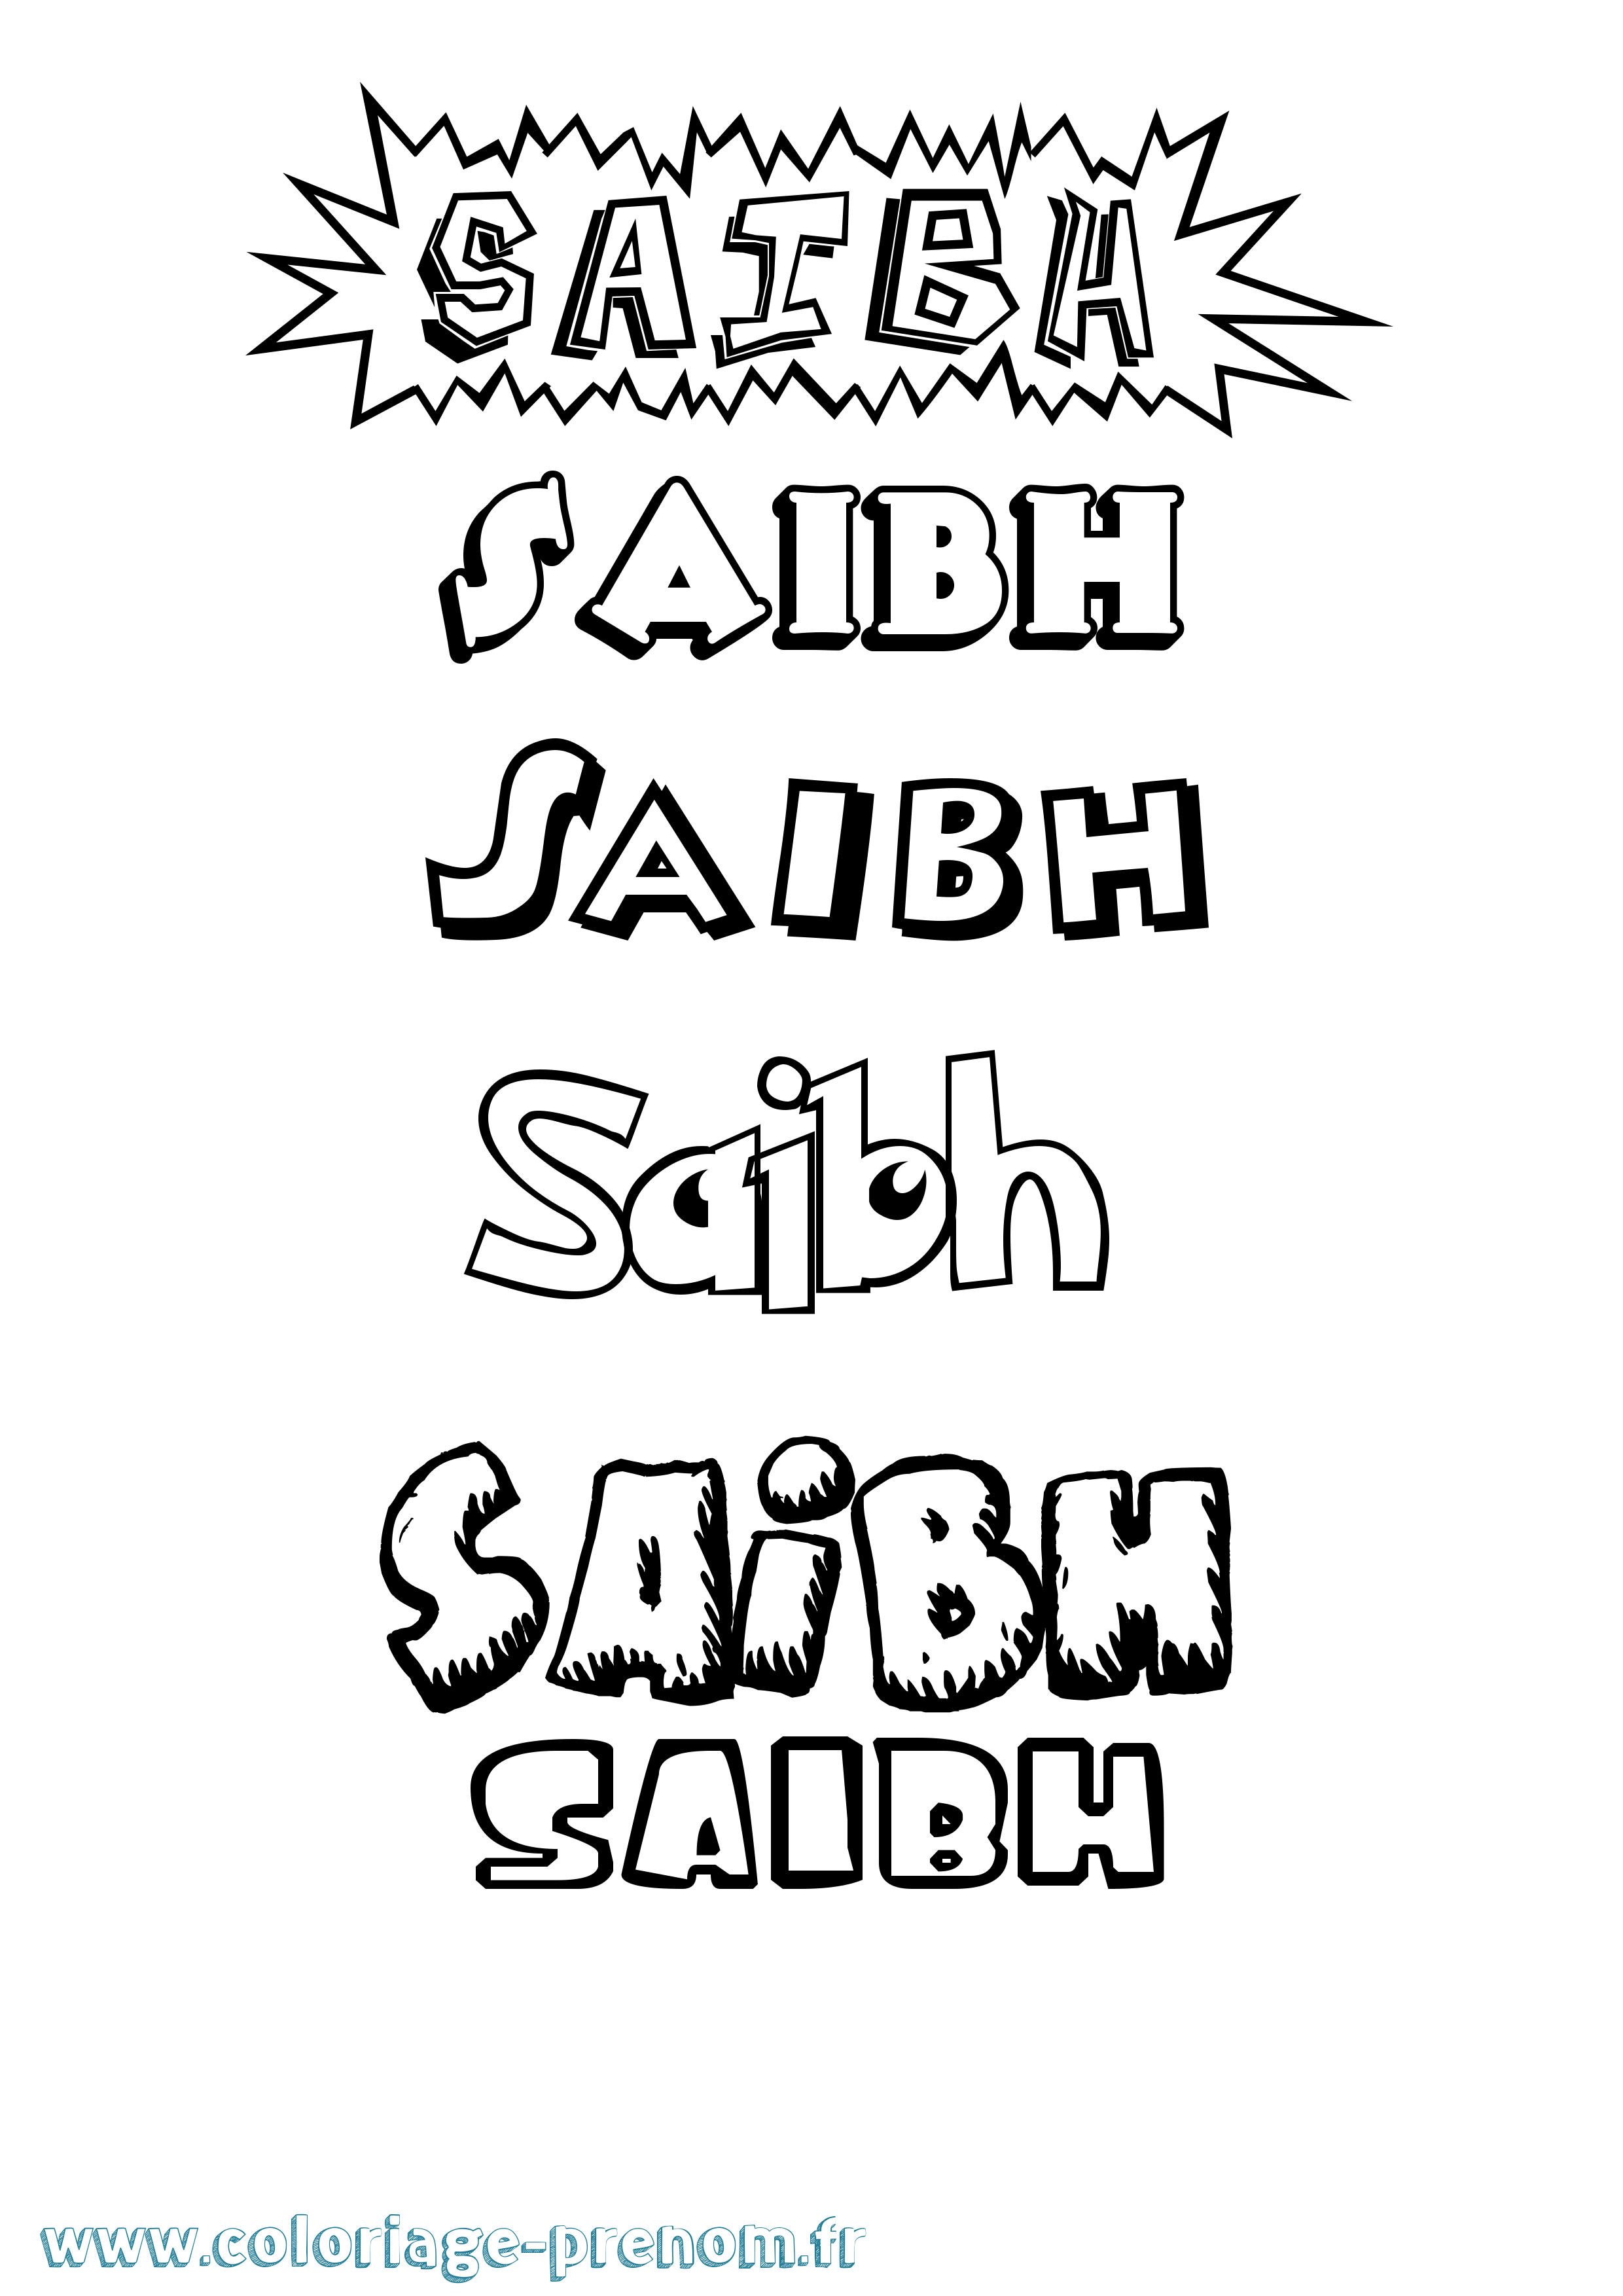 Coloriage prénom Saibh Dessin Animé